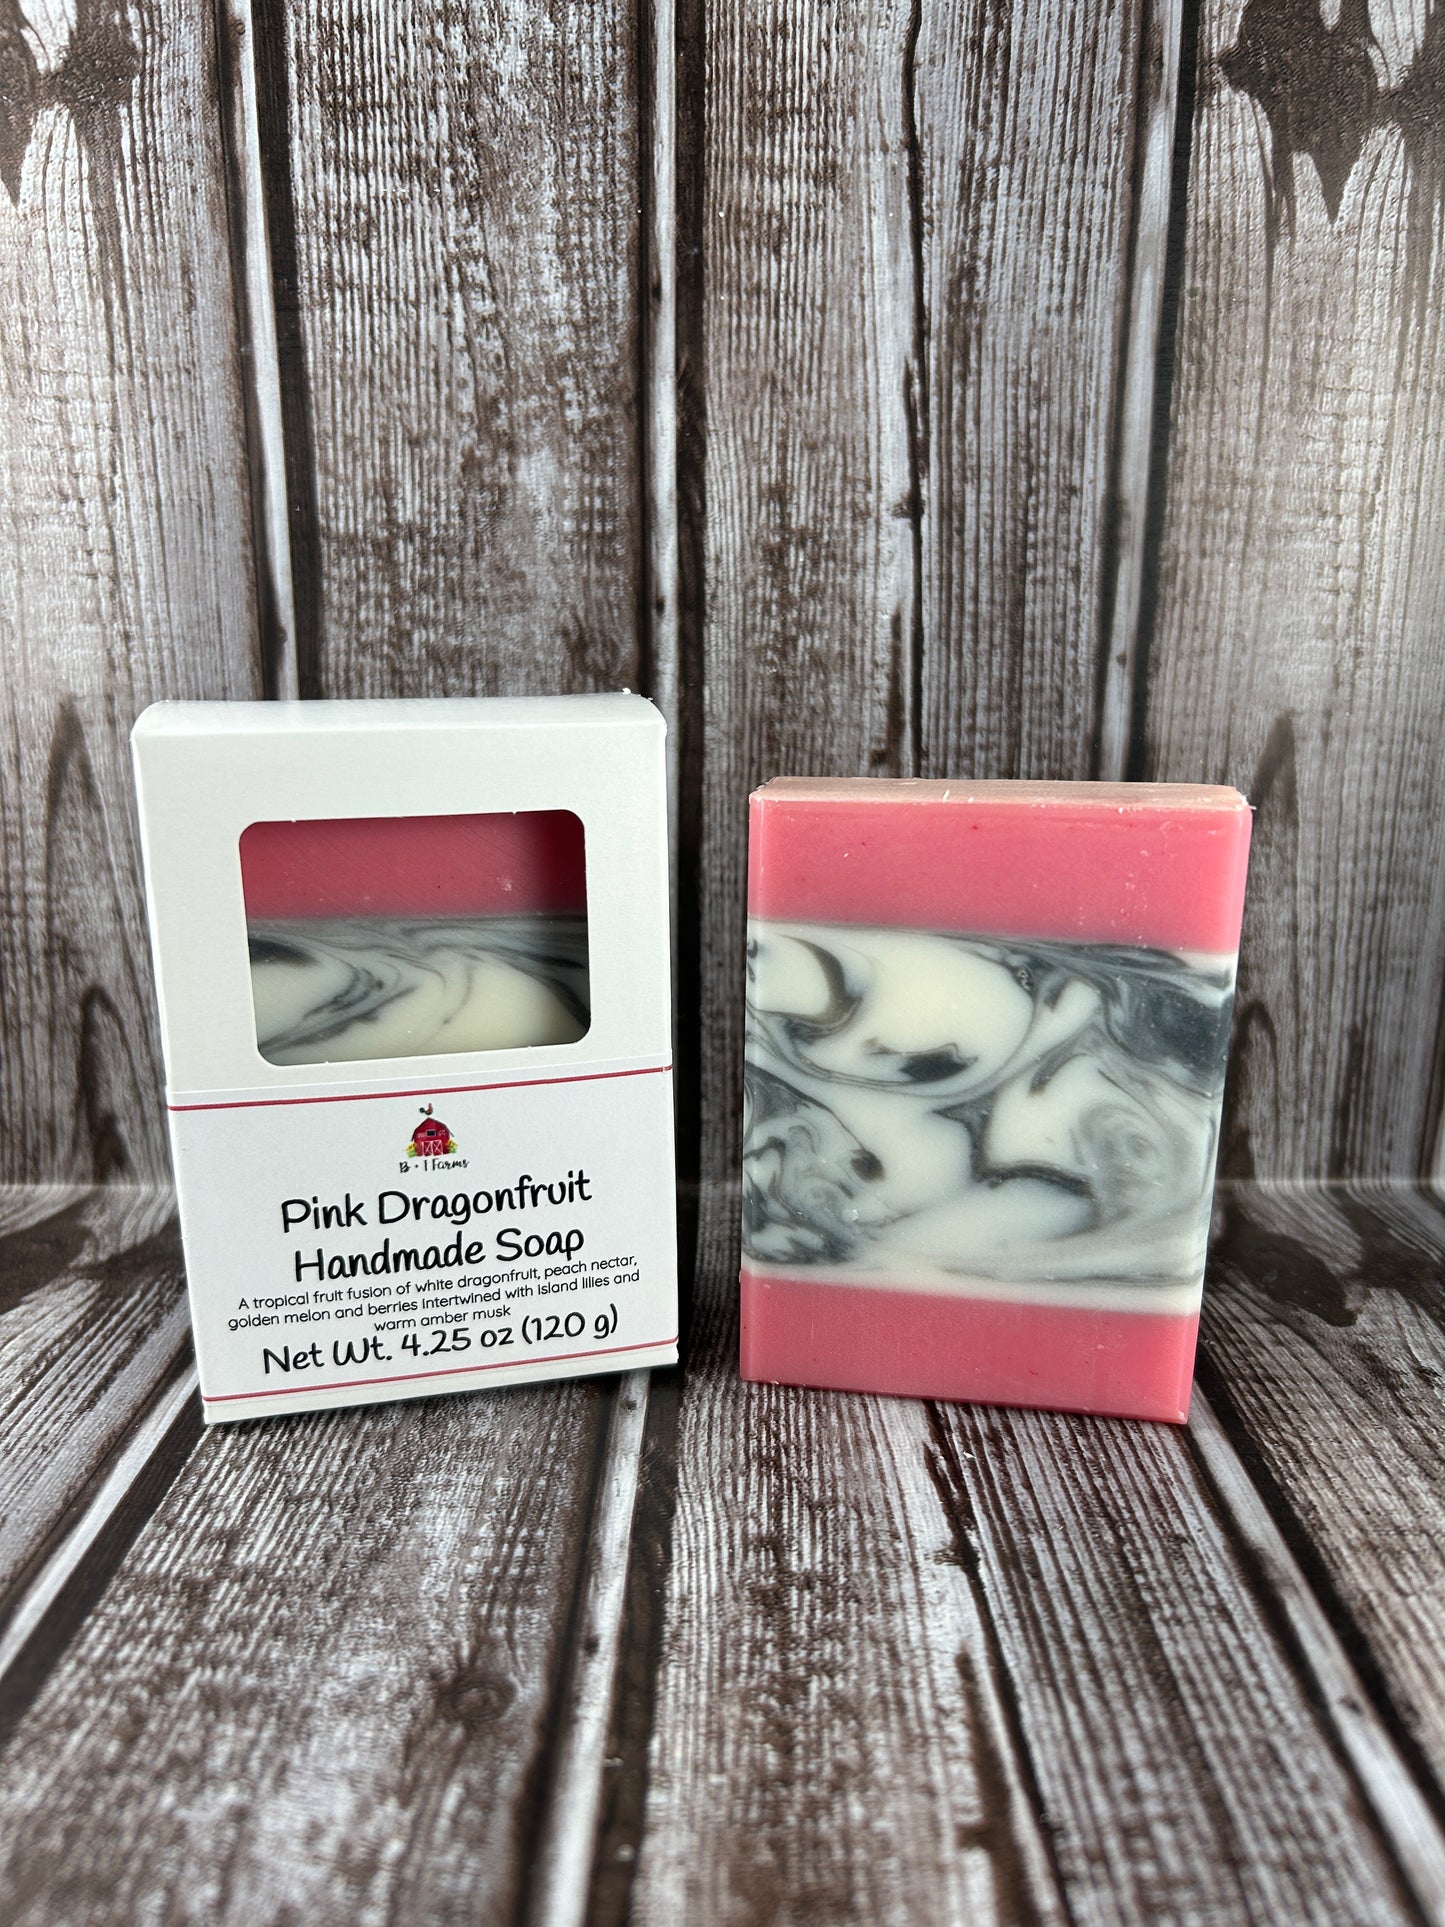 Pink Dragonfruit Handmade Soap